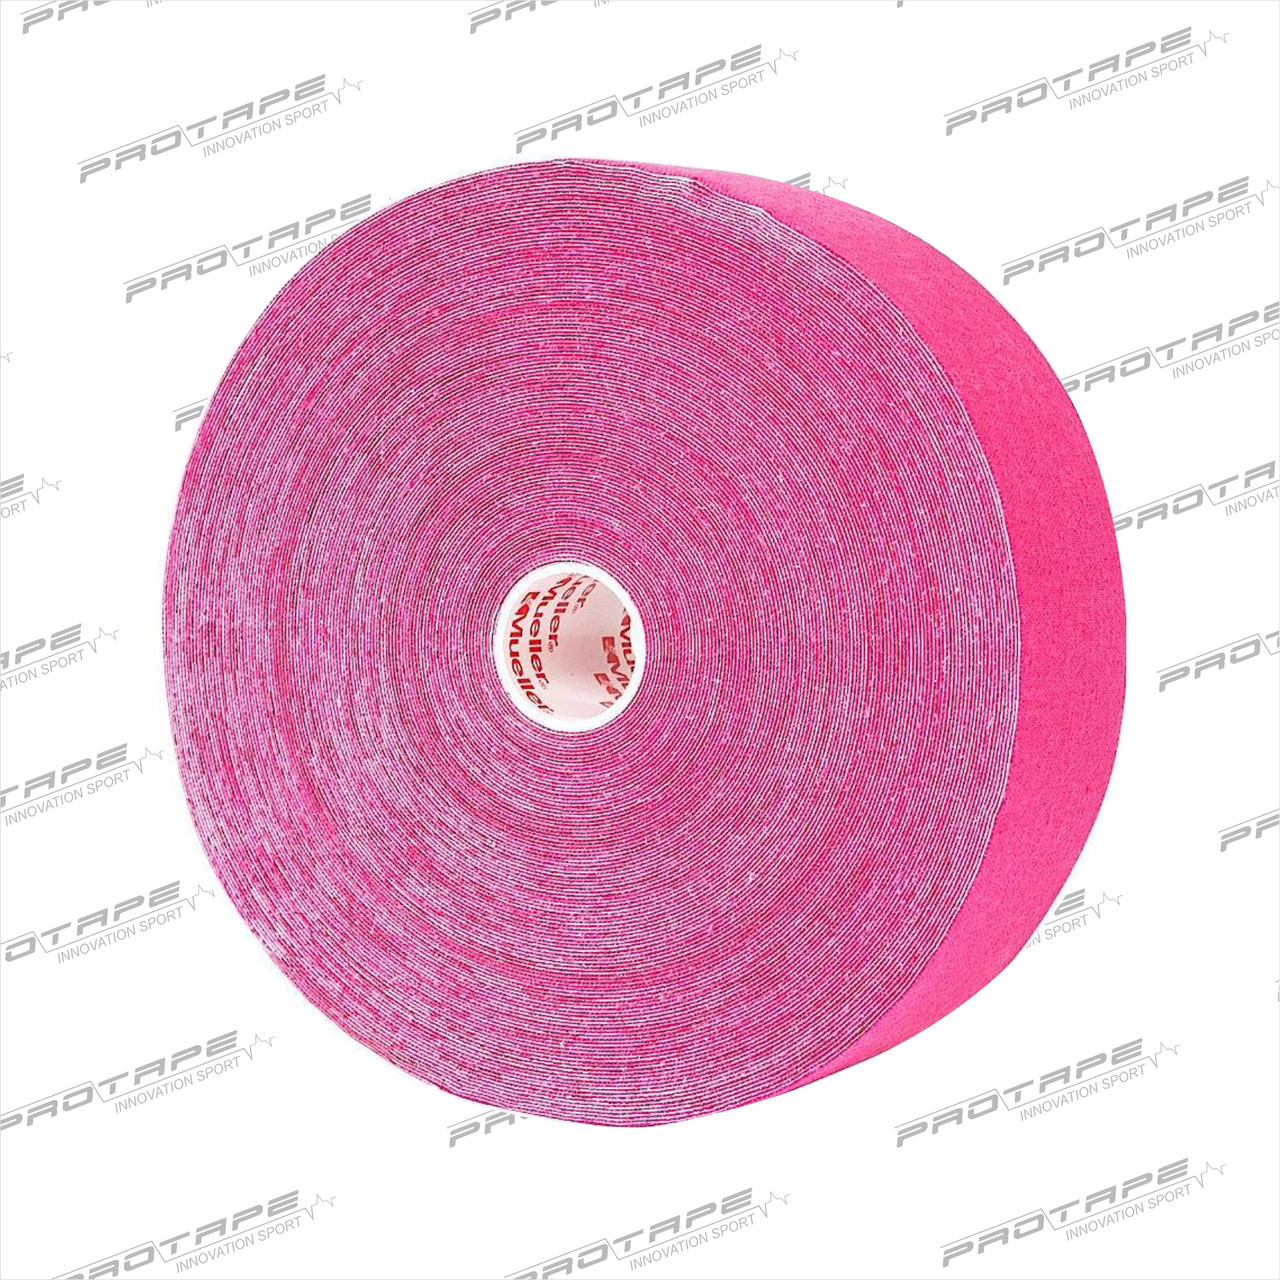 Кинезио тейп Mueller Kinesiology Tape Pink 30 м, 27633, розовый цвет, 5.0см размер